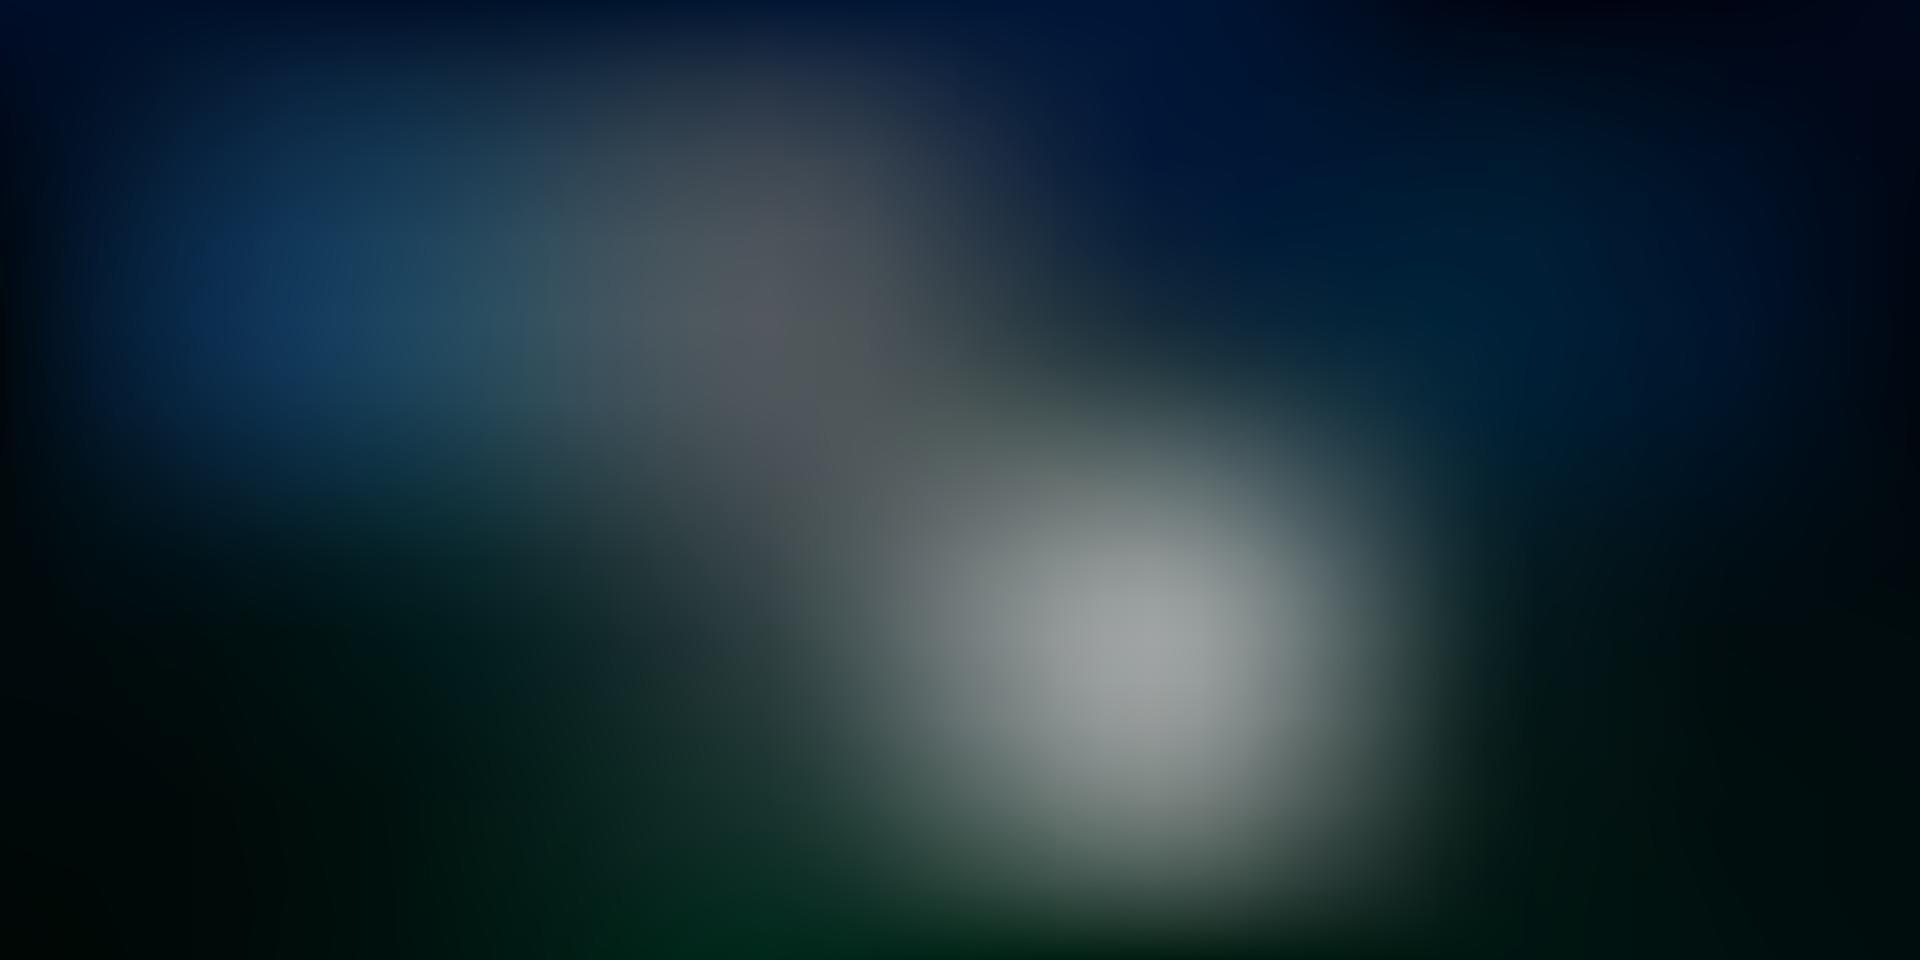 Dark Blue, Green vector blur backdrop.